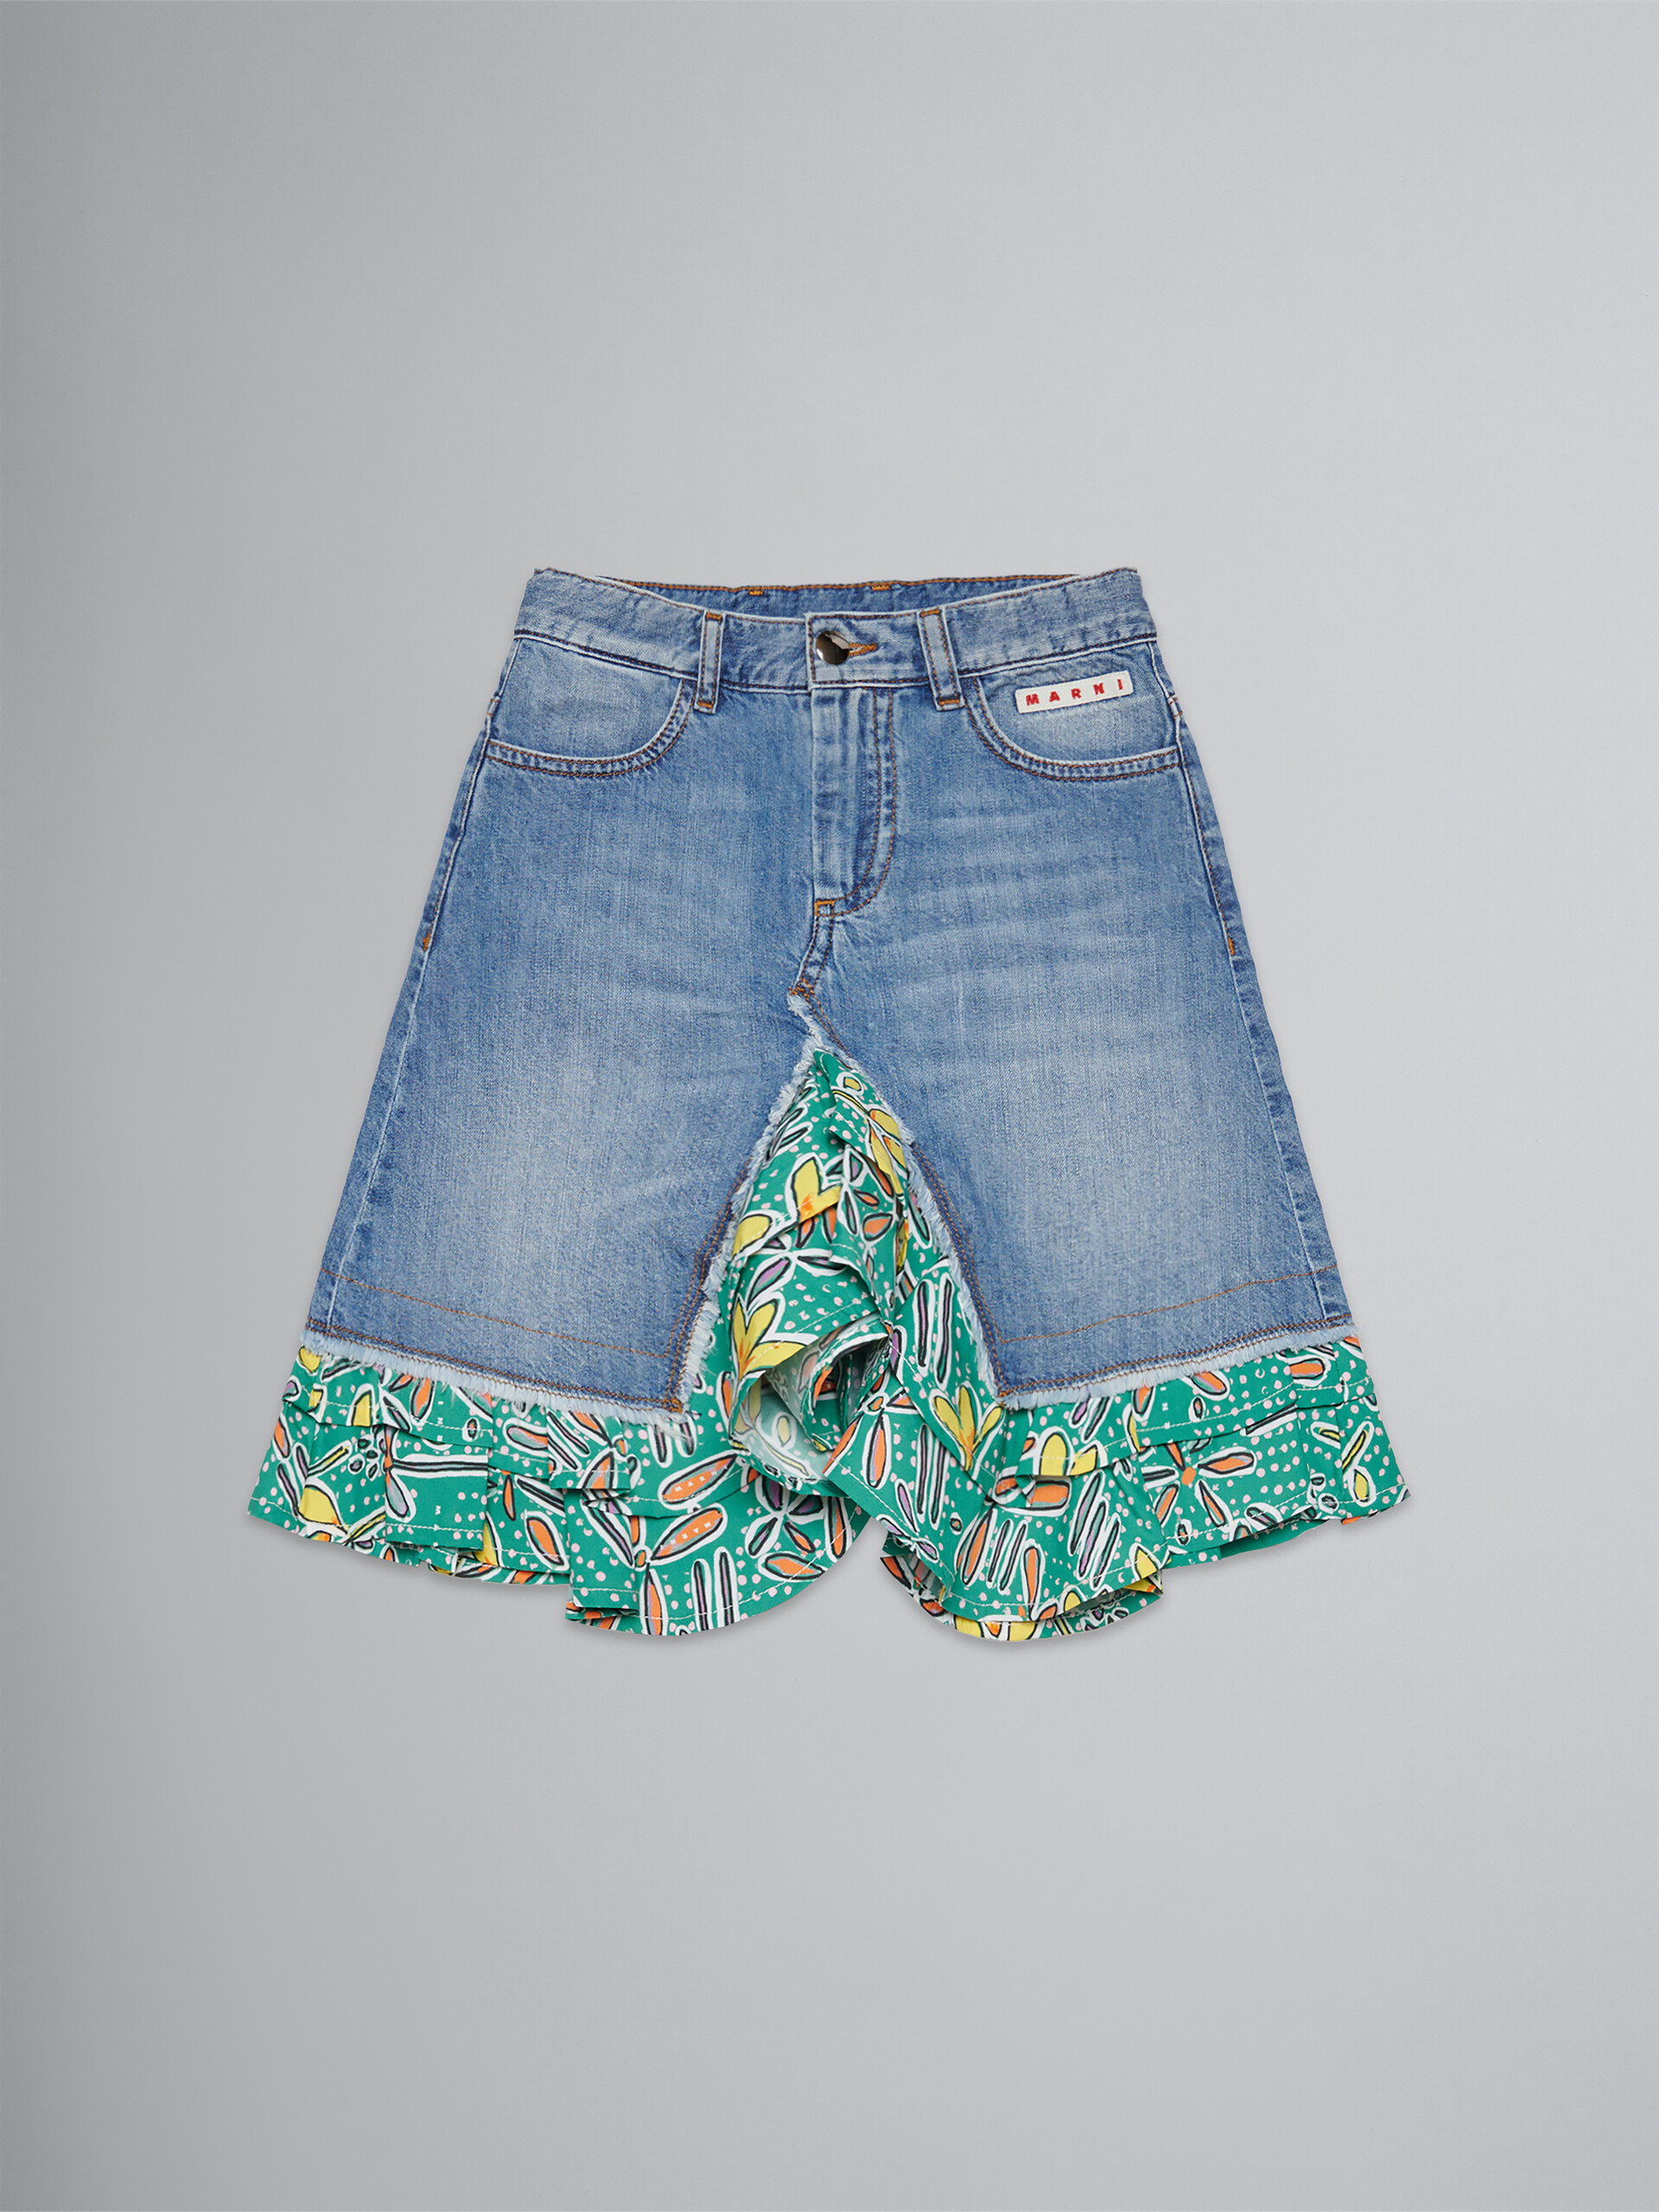 Denim skirt with Carioca inserts - Skirts - Image 1